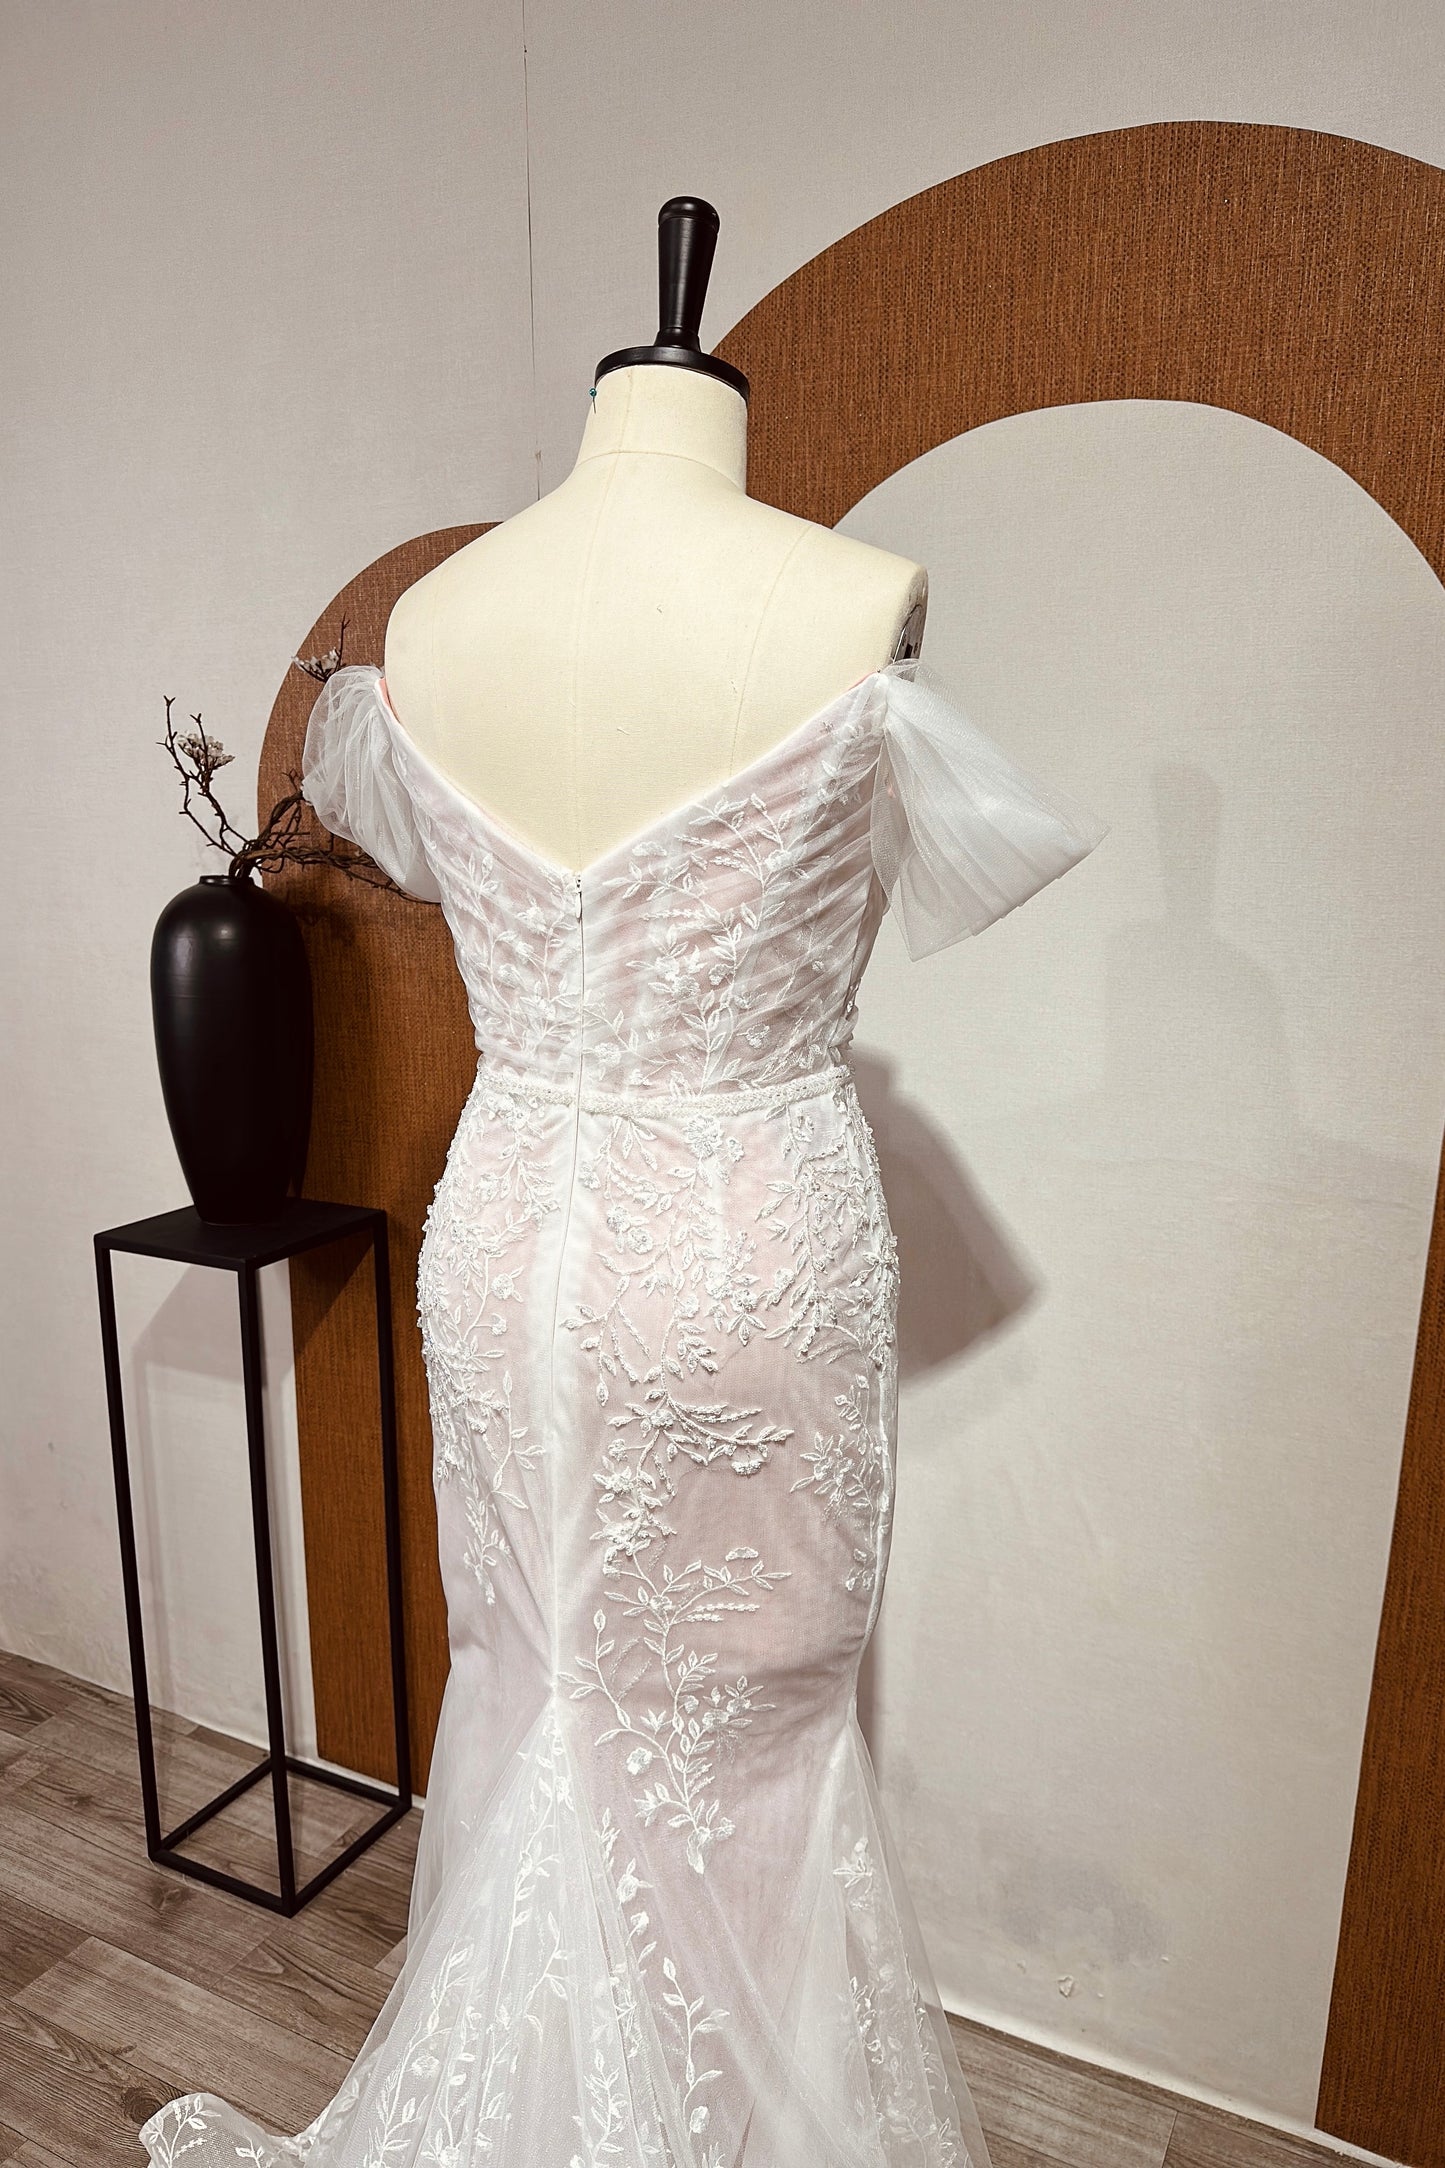 Cara - Custom Wedding Dress - Corset Lace Wedding Dress - Unique Wedding Dress - Boho Floral Wedding Dress - Off Shoulder Mermaid Wedding Dress